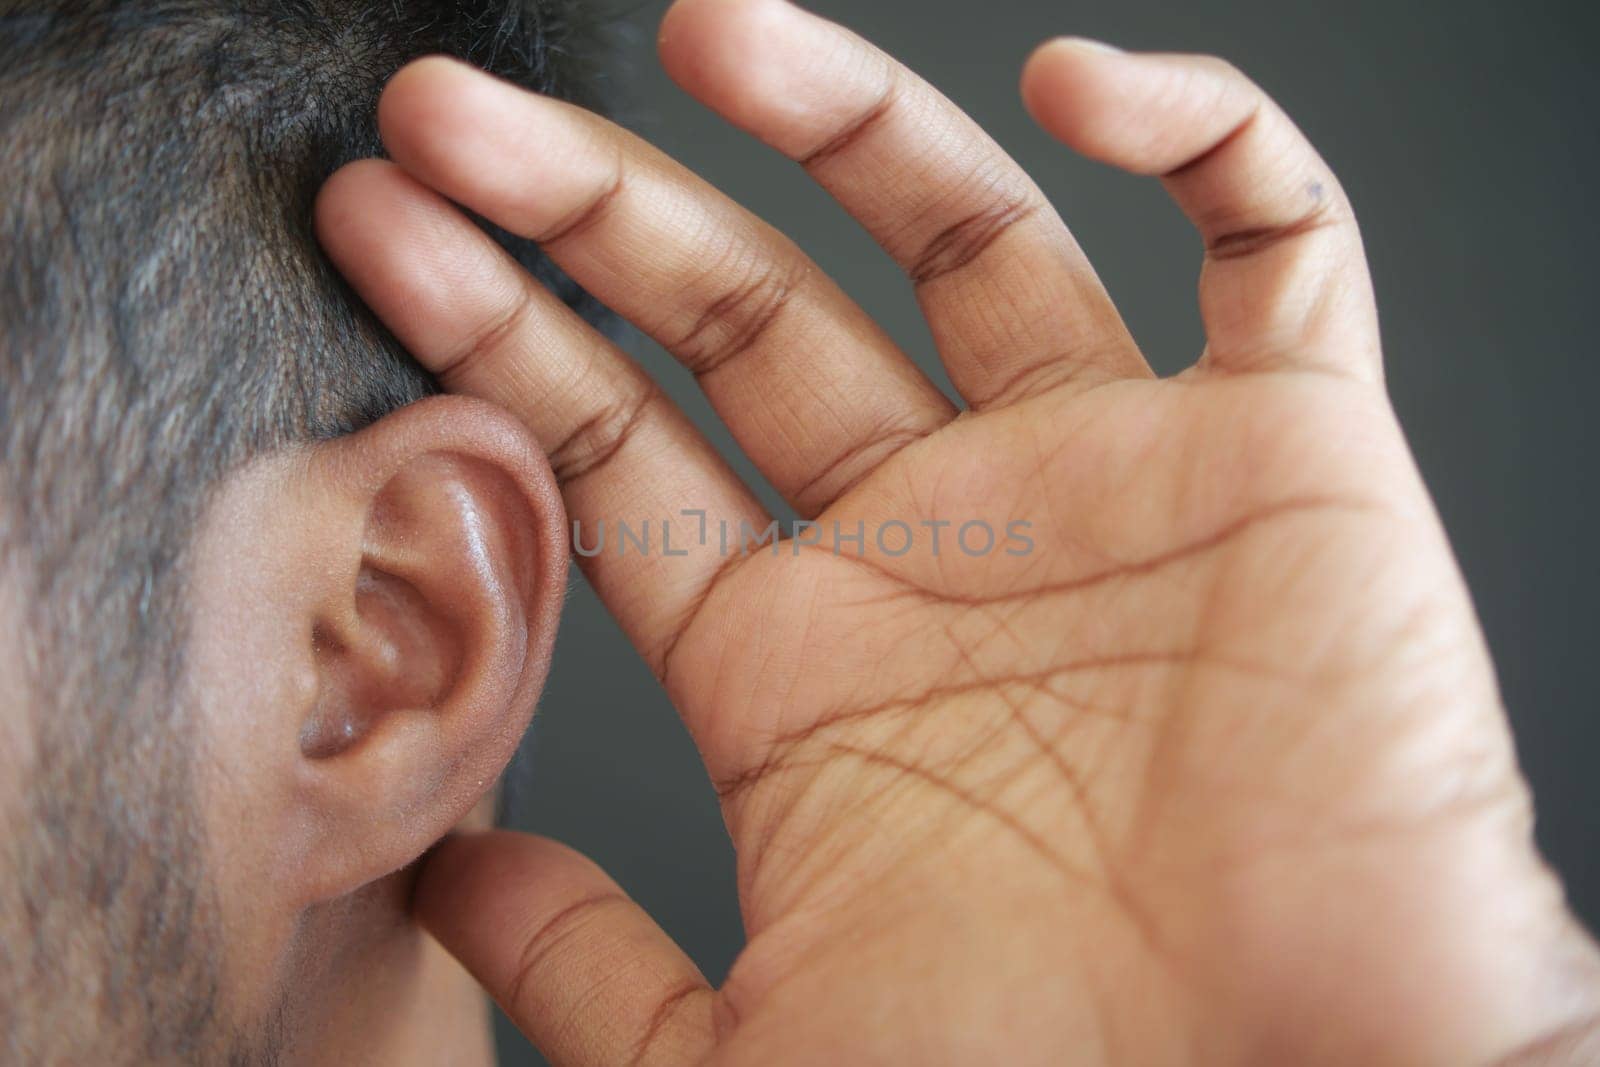 young man having ear pain touching his painful ear